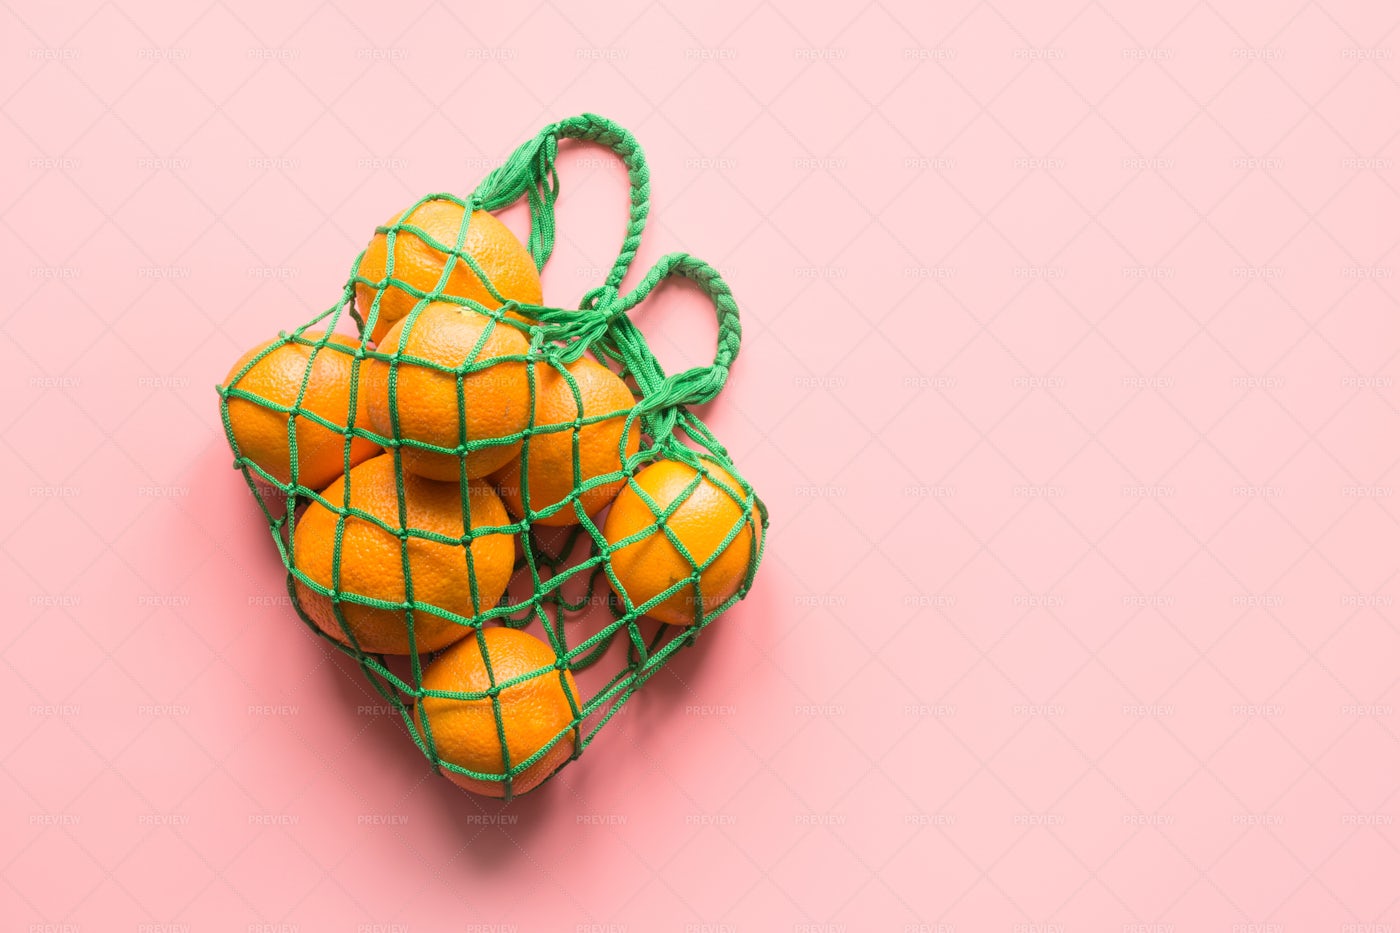 Mesh Shopping Bag Of Oranges: Stock Photos